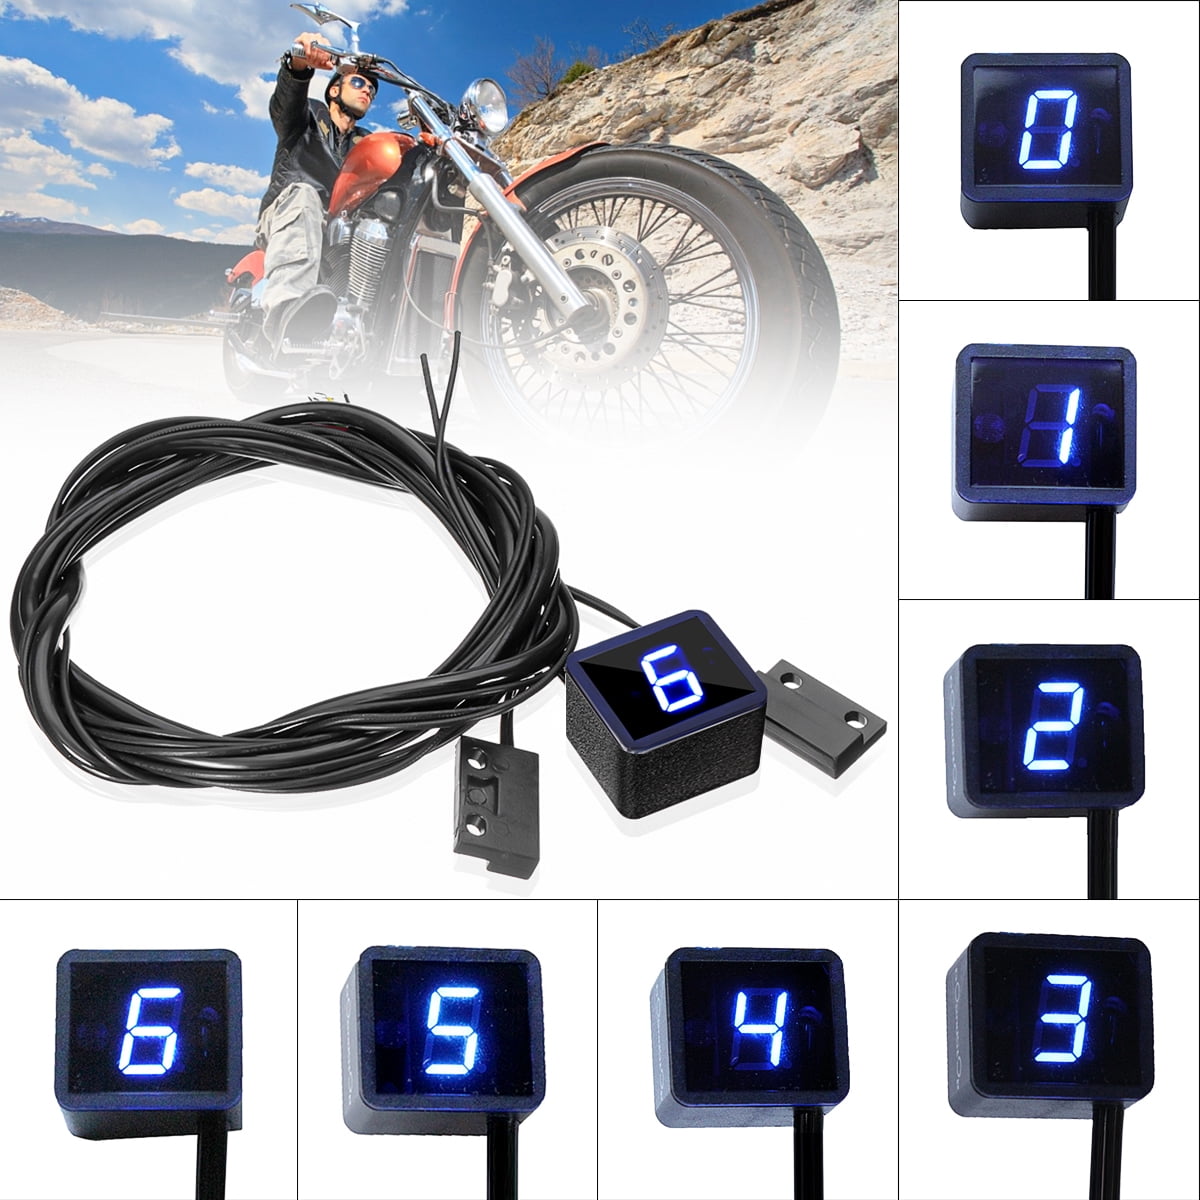 Blue ATFWEL Motorcycle Gear Indicator with Holder Bracket,Waterproof LED Display Digital Display Speedometer Shift Lever Sensors for Yamaha